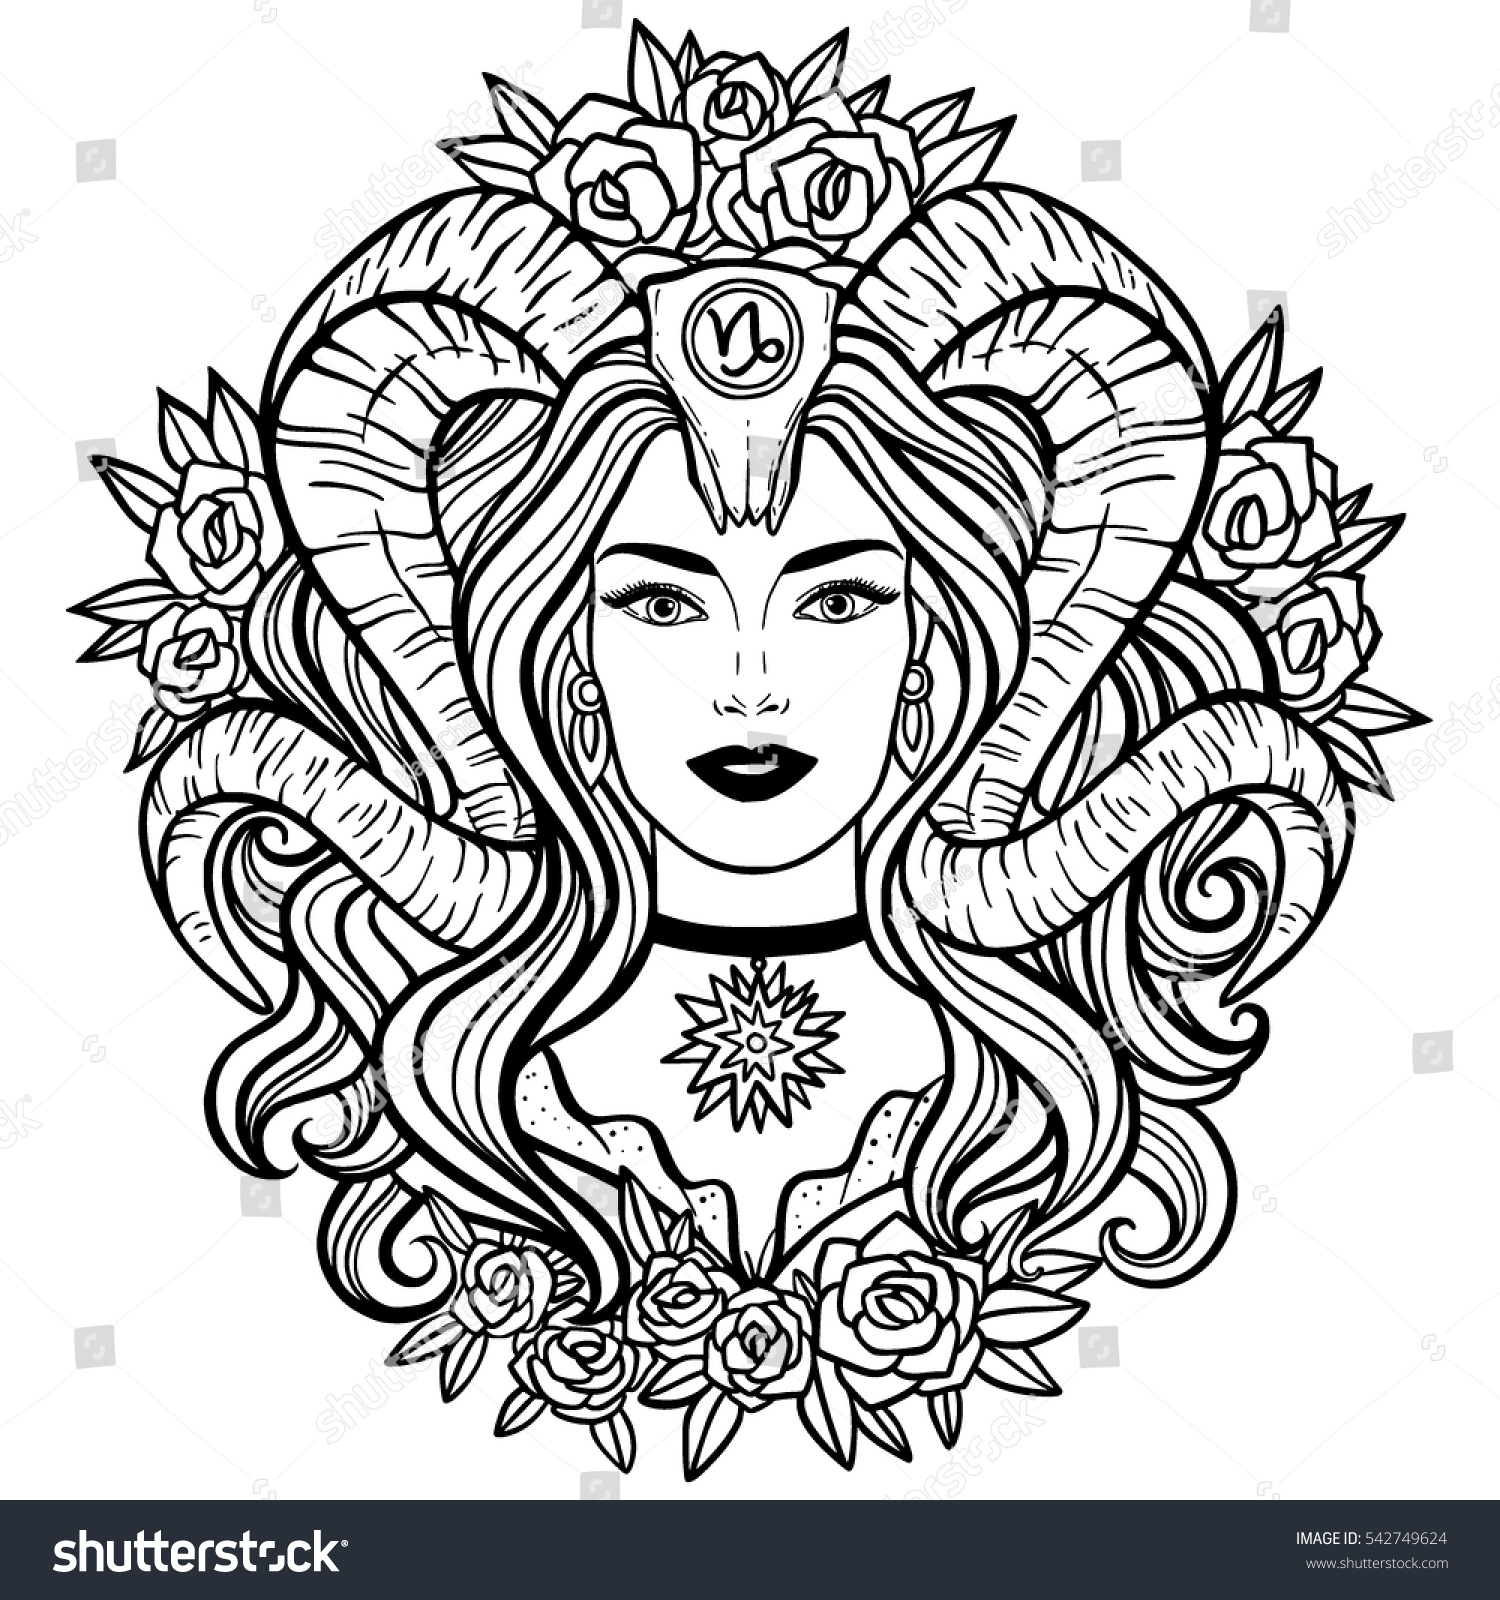 Download Capricorn - Zodiac hand drawn illustration, - Royalty Free Stock Vector 542749624 - Avopix.com